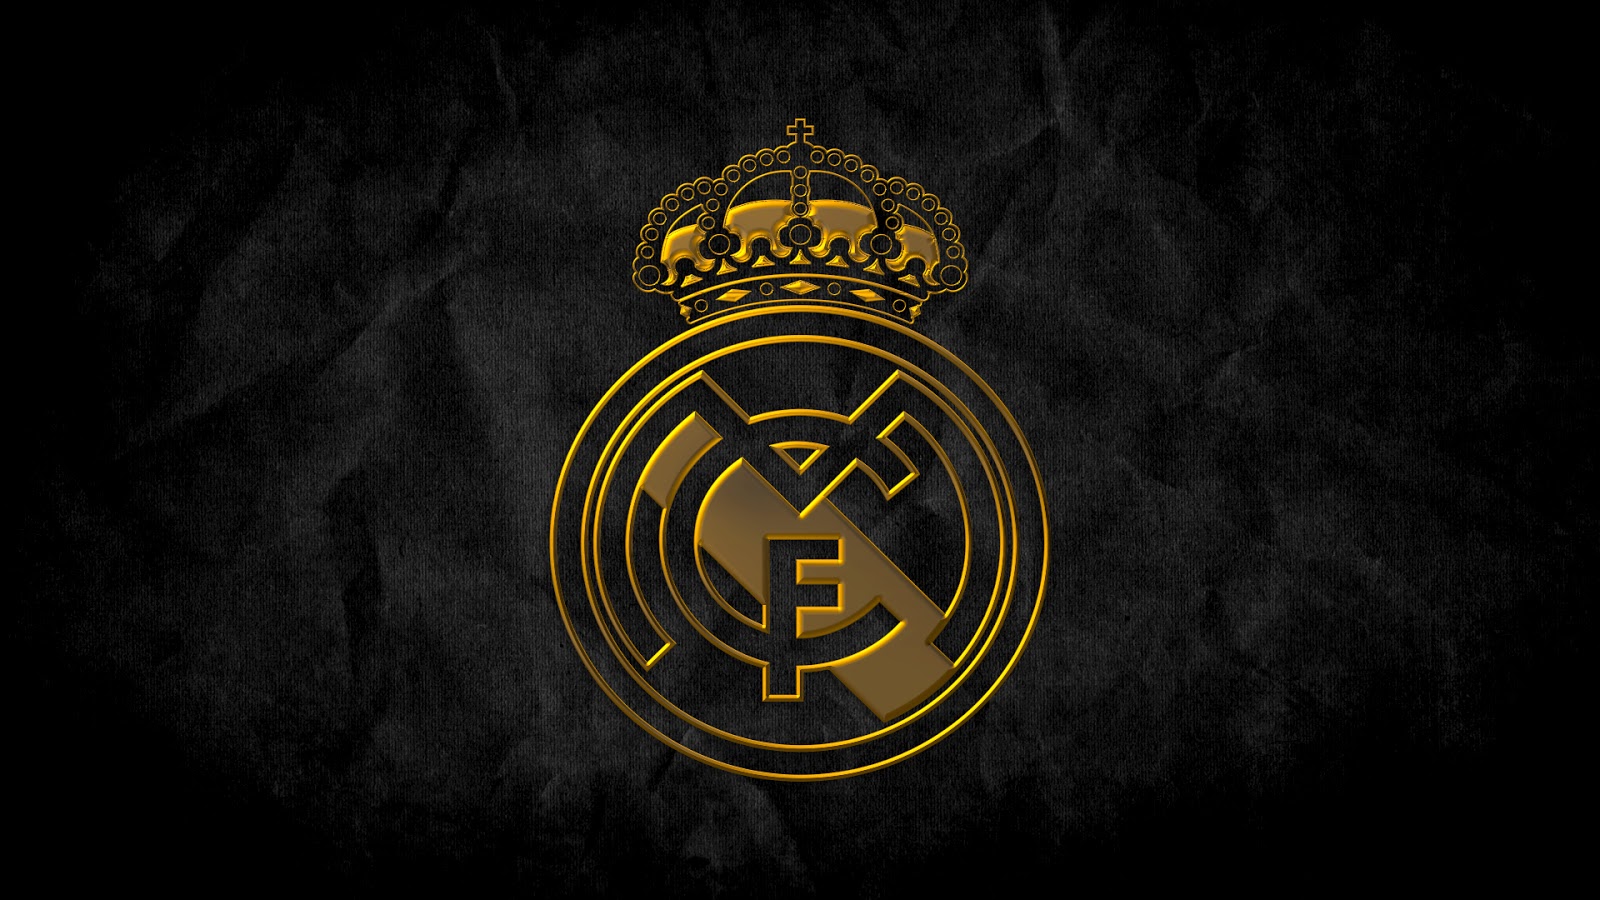 72+ Real Madrid Logo Wallpapers on WallpaperSafari